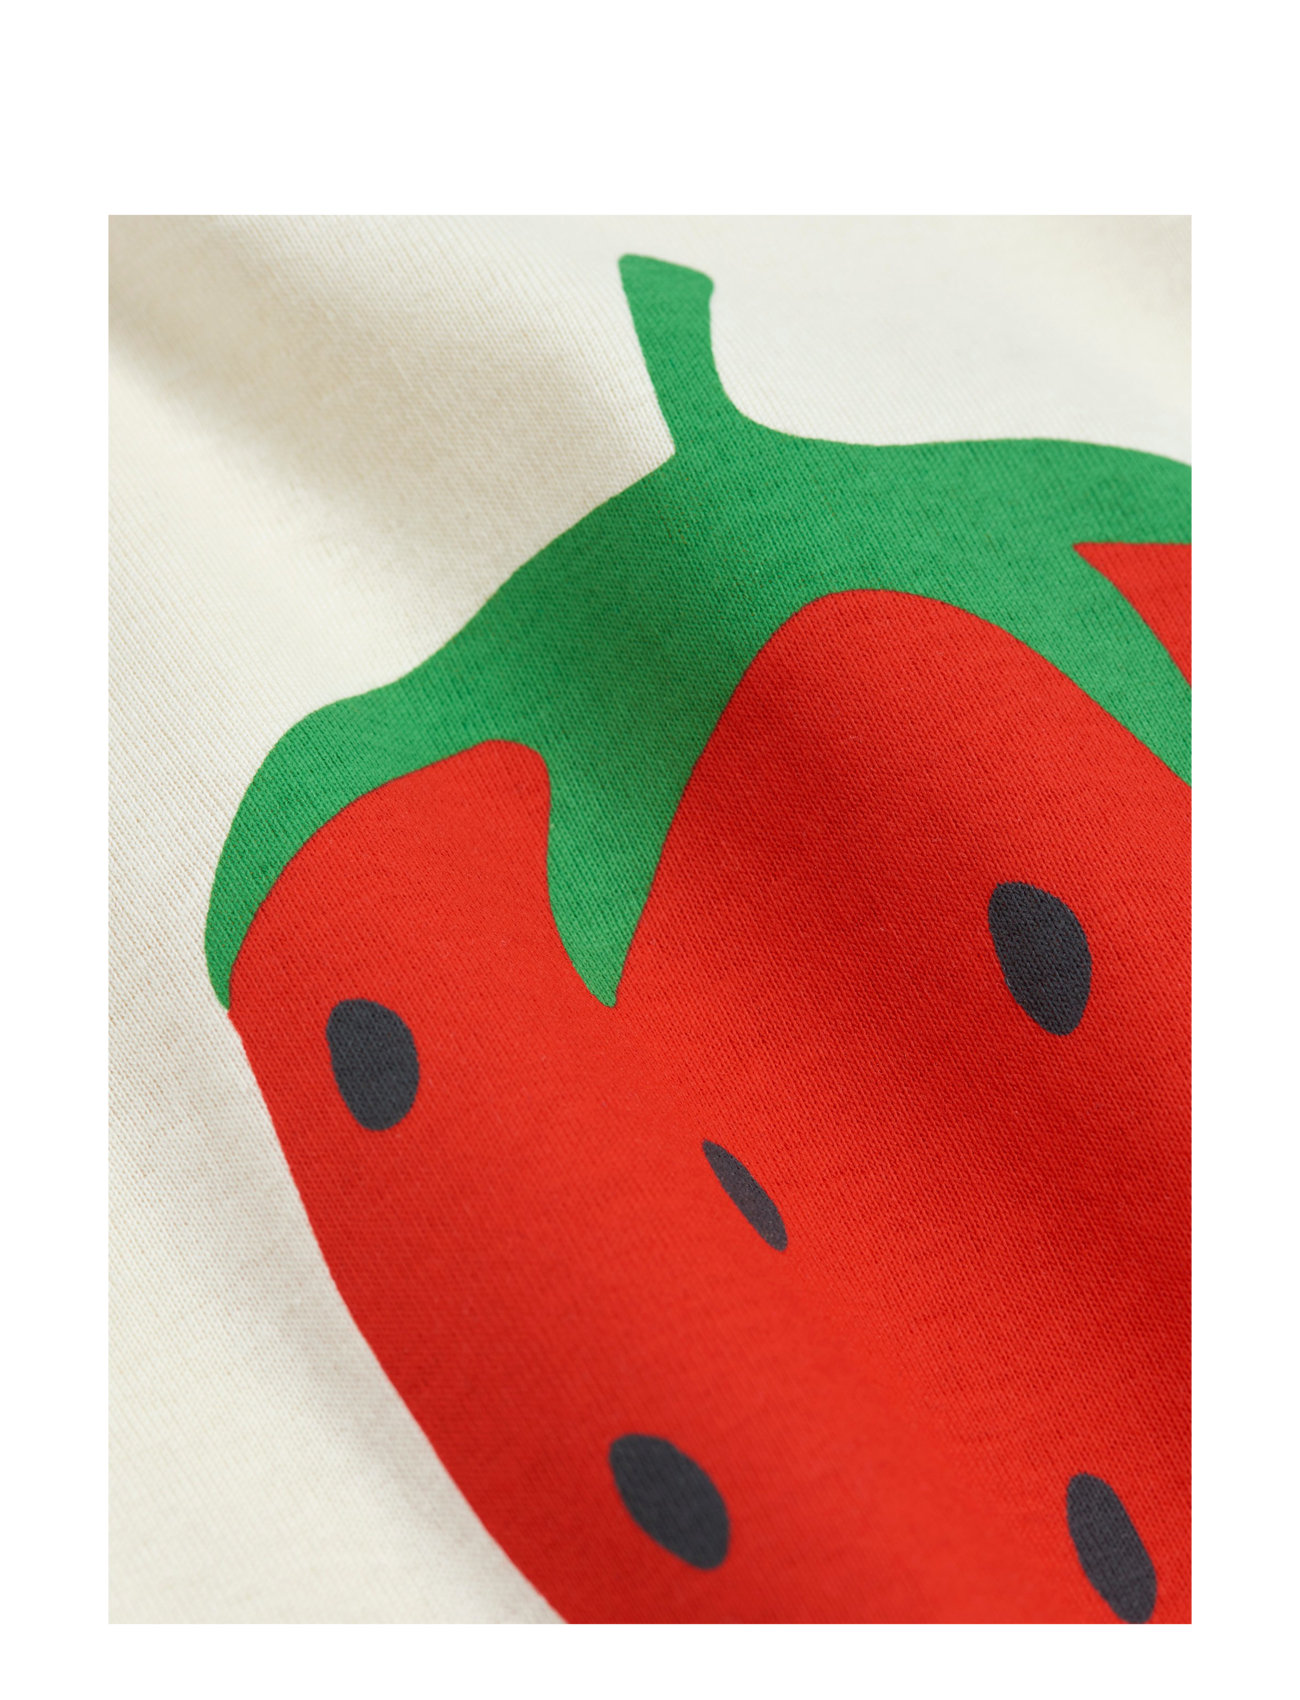 Strawberry Sp Ss Tee T-shirt Creme Mini Rodini